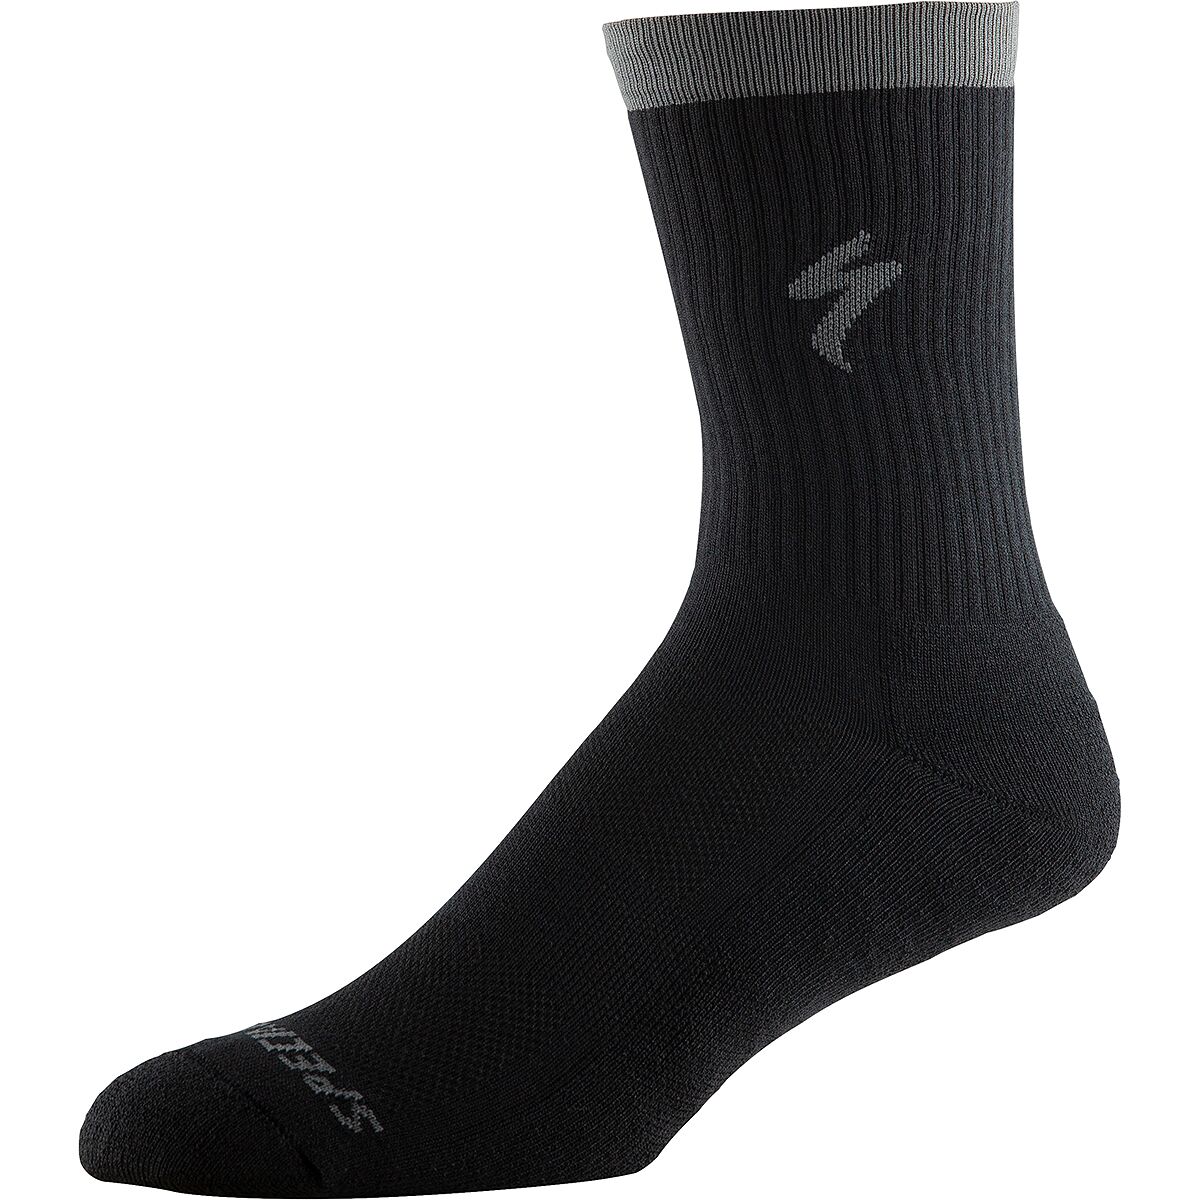 Specialized Techno MTB Tall Sock Black, S - Men's